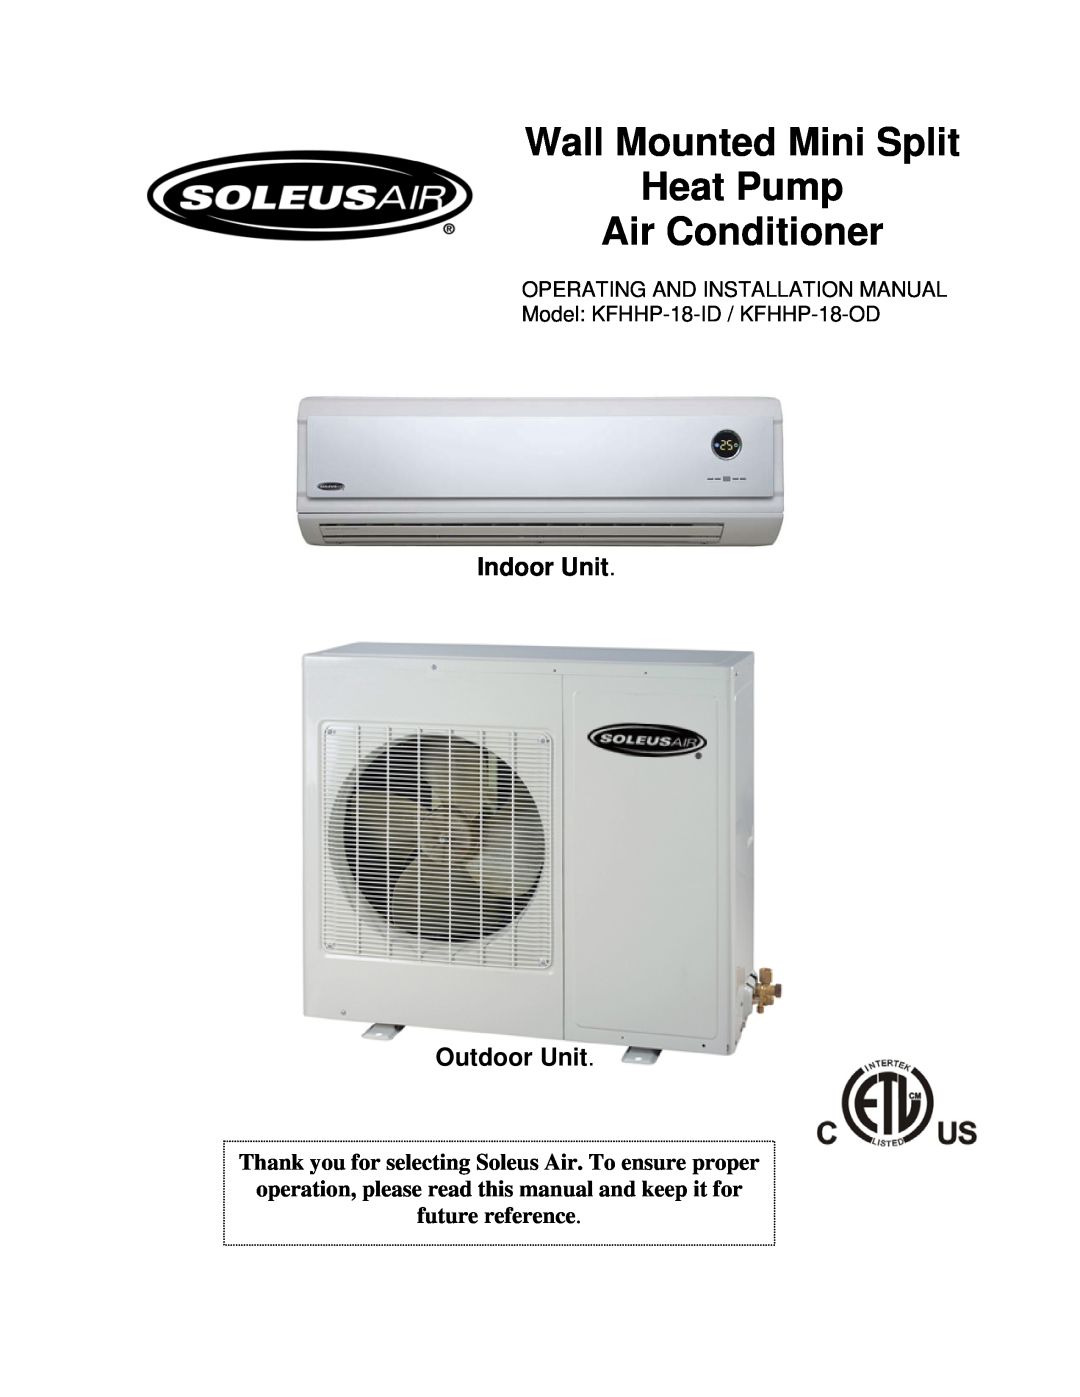 Soleus Air KFHHP-18-OD installation manual Indoor Unit Outdoor Unit, Wall Mounted Mini Split Heat Pump Air Conditioner 